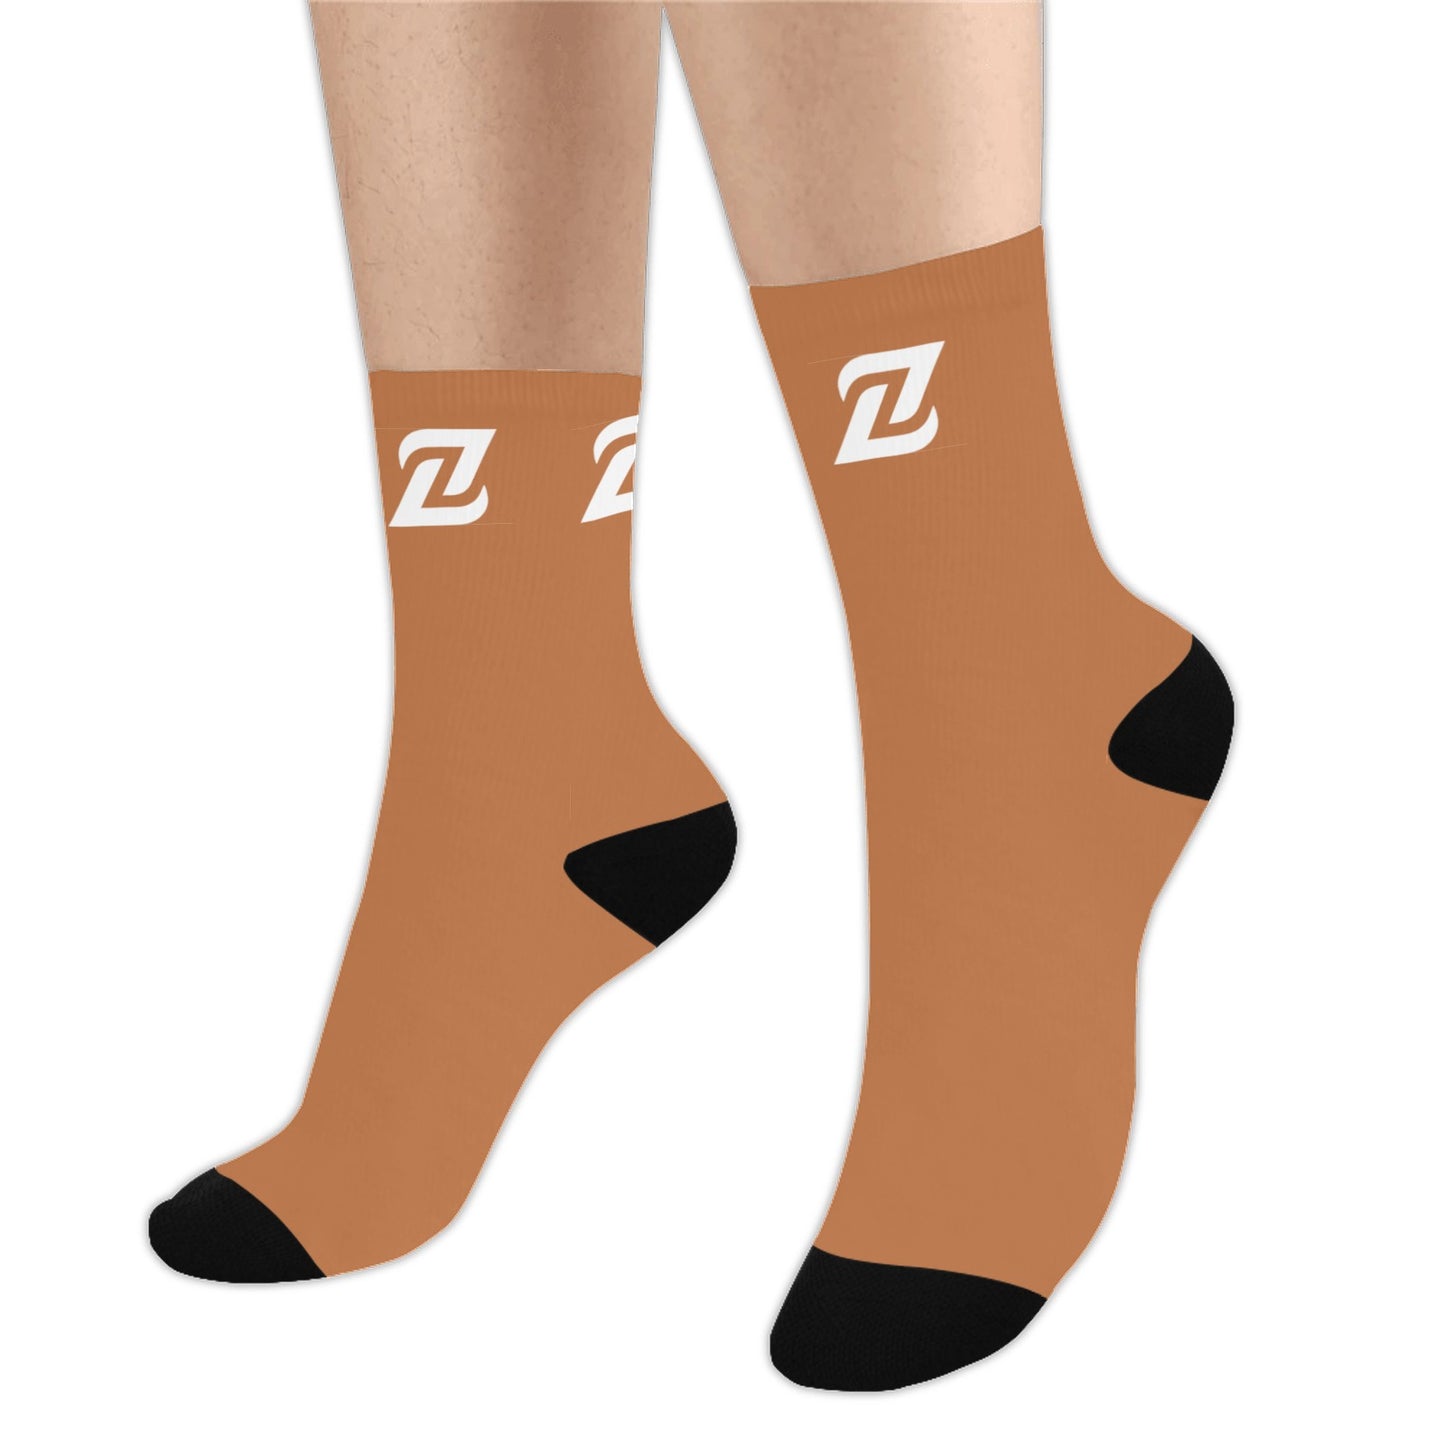 Zen Socks - Nude Brown Tan